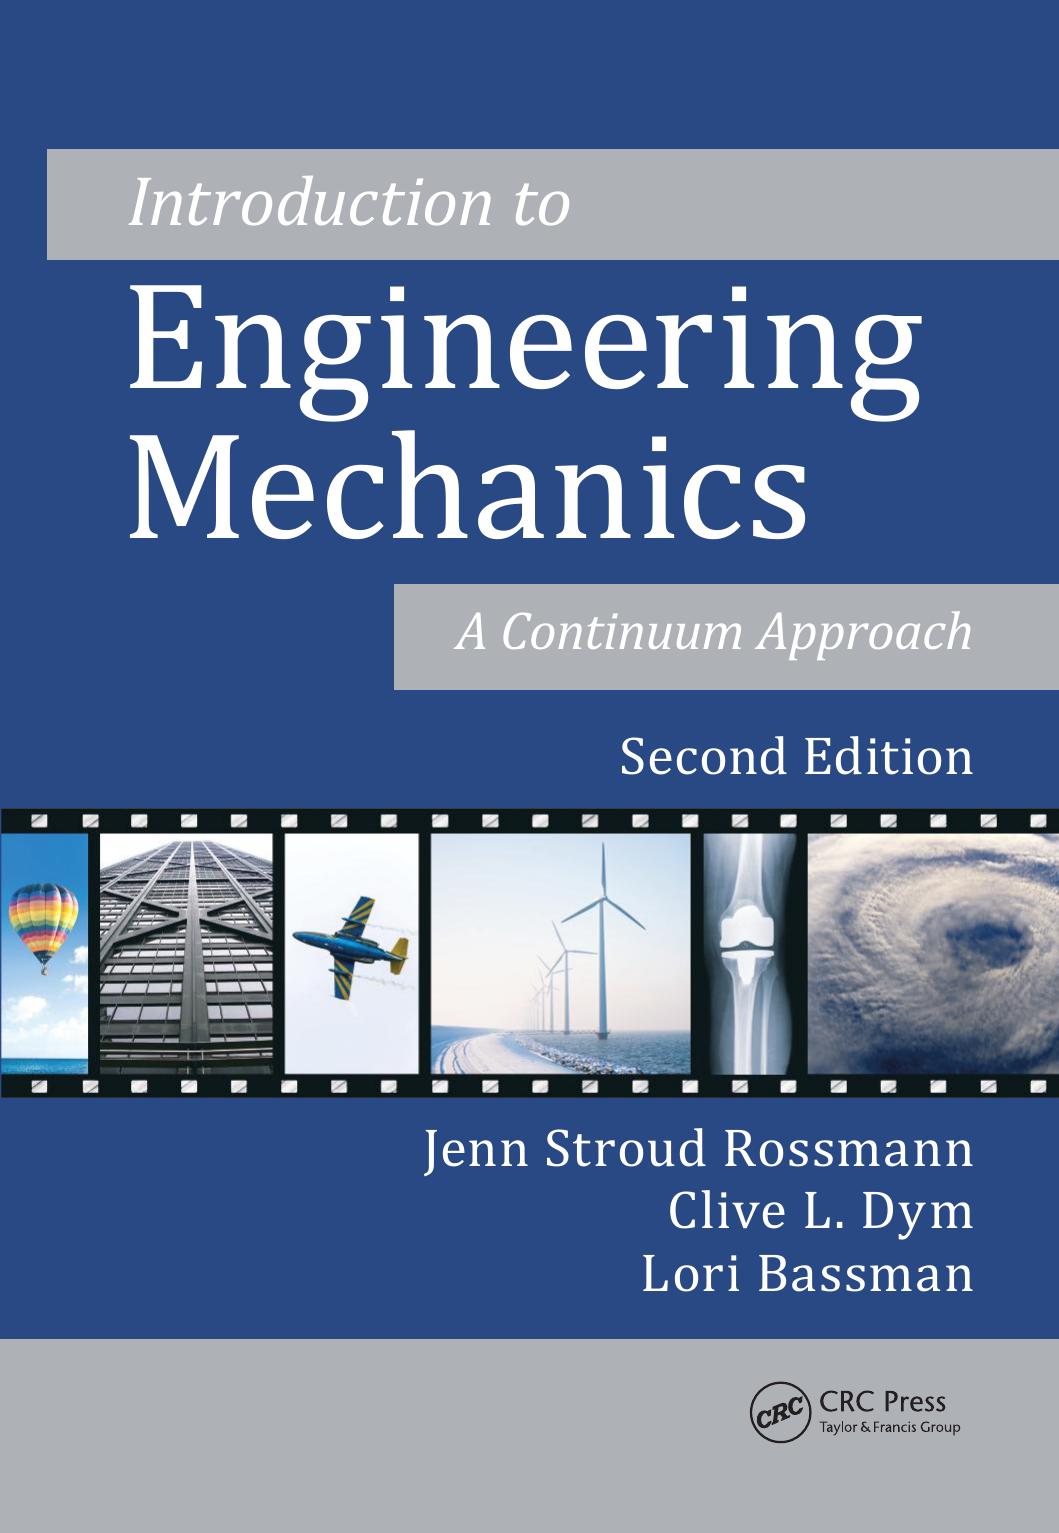 Introduction to Engineering Mechanics 2nd ed 2015